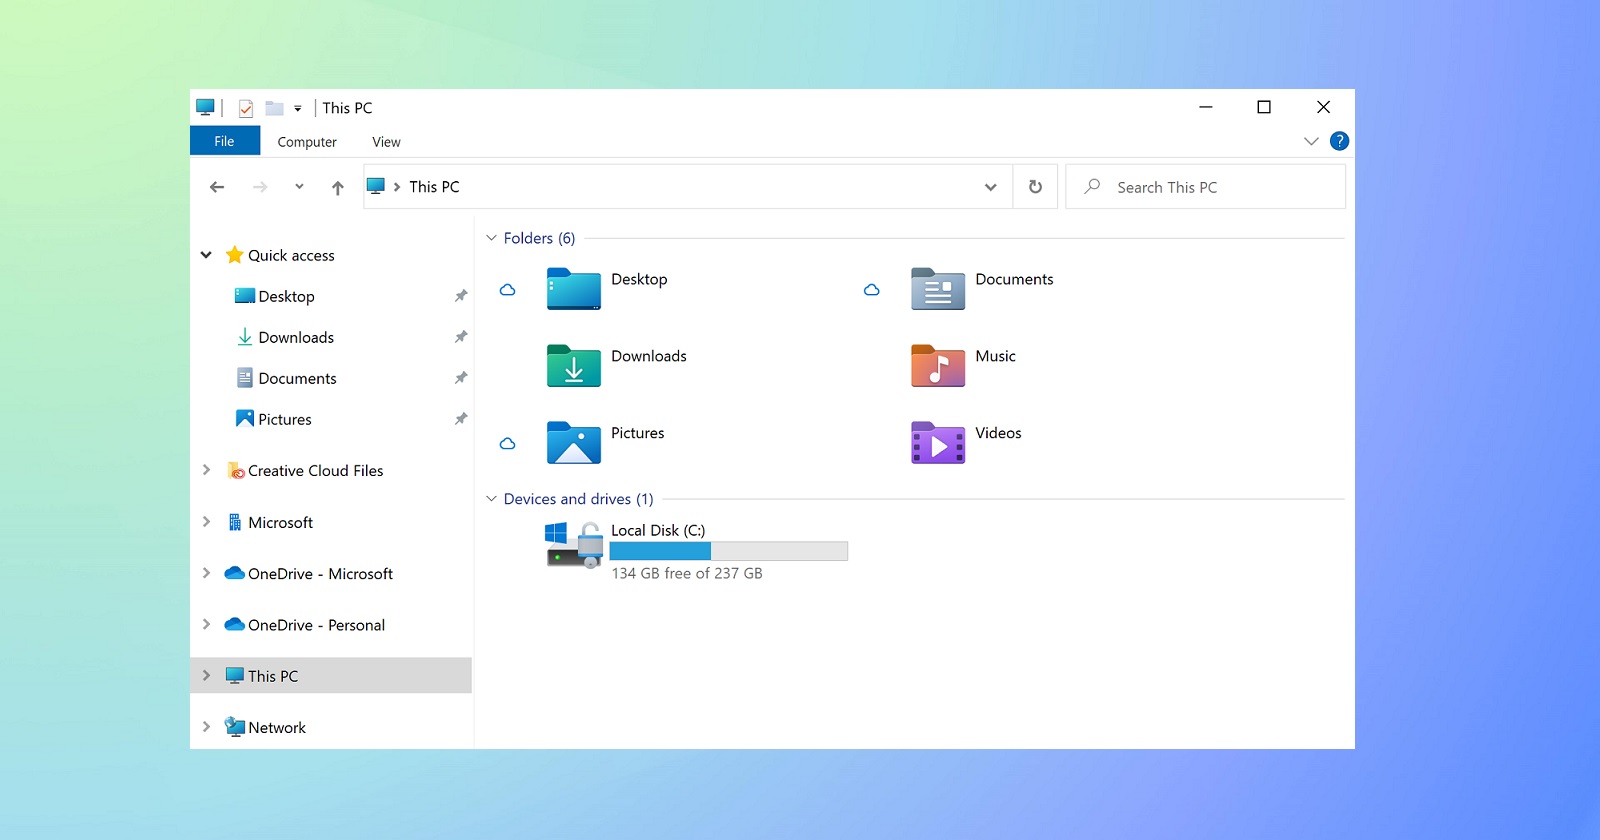 Nέα εικονίδια θα αποκτήσει ο File Explorer των Windows 10